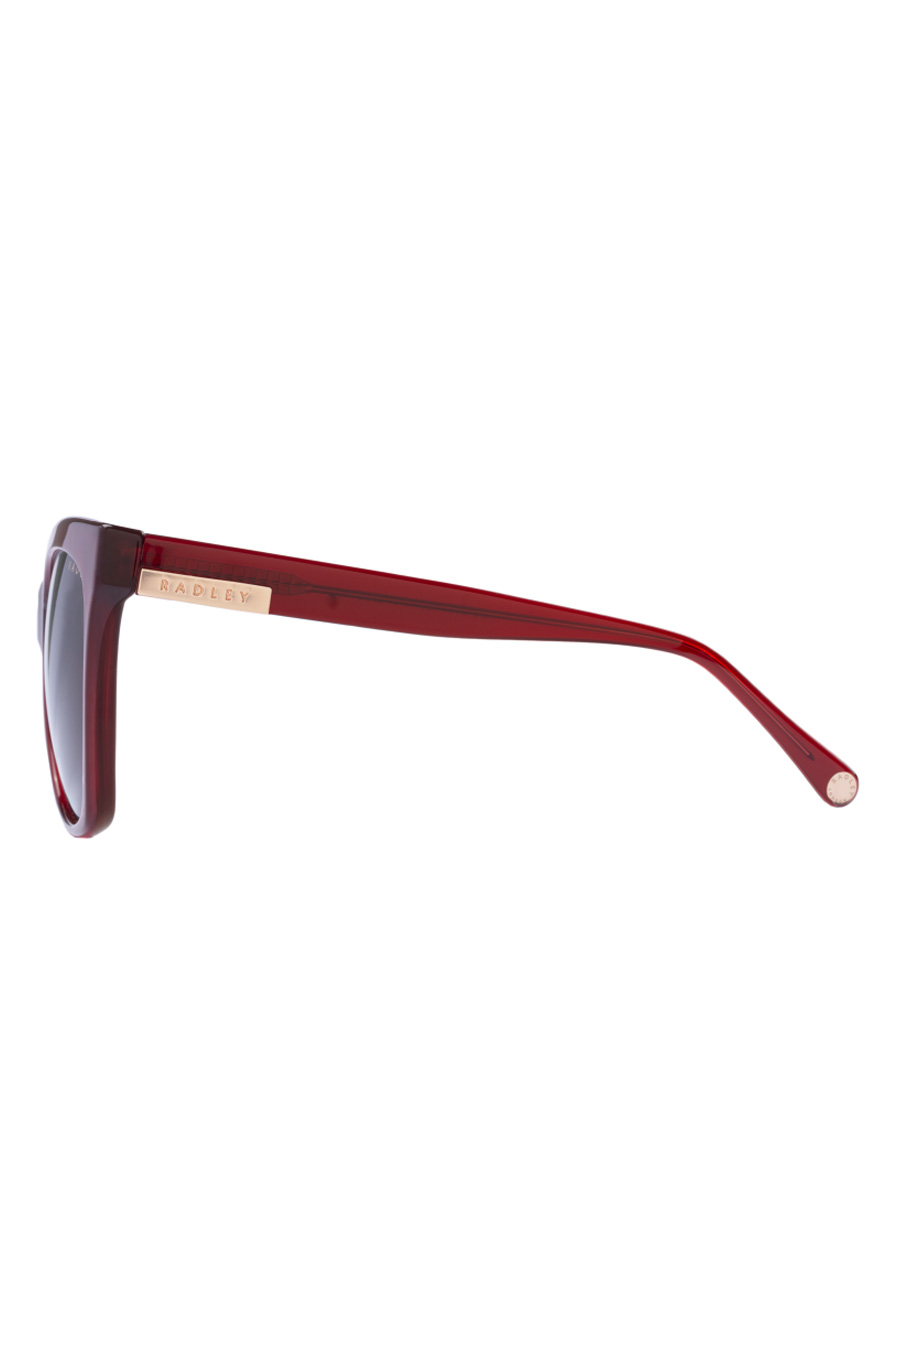 Sunglasses RADLEY RDS-6504-172